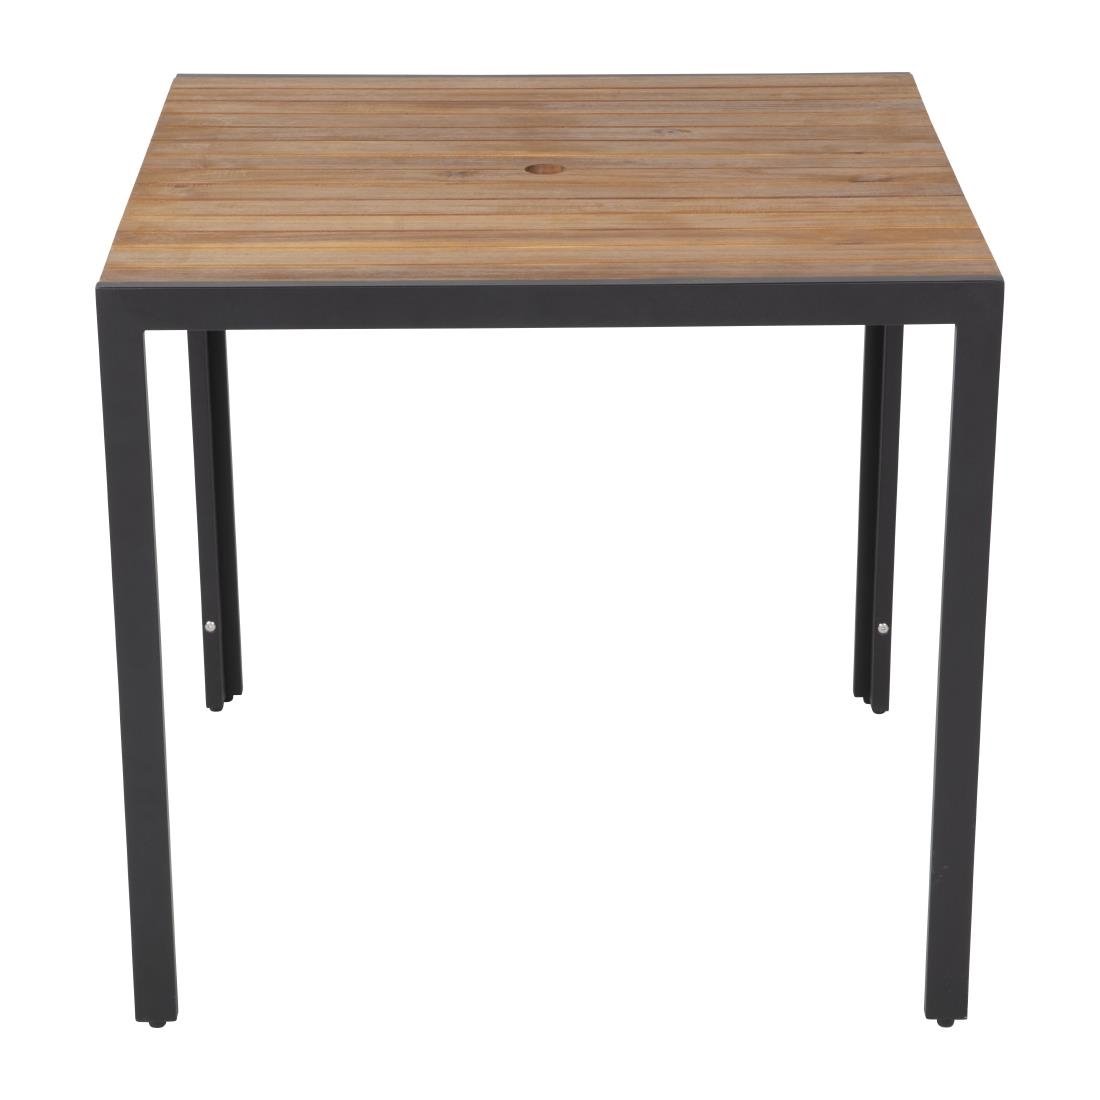 Bolero DS152 Acacia Square Table, Wood Top & Steel Base - 800mm